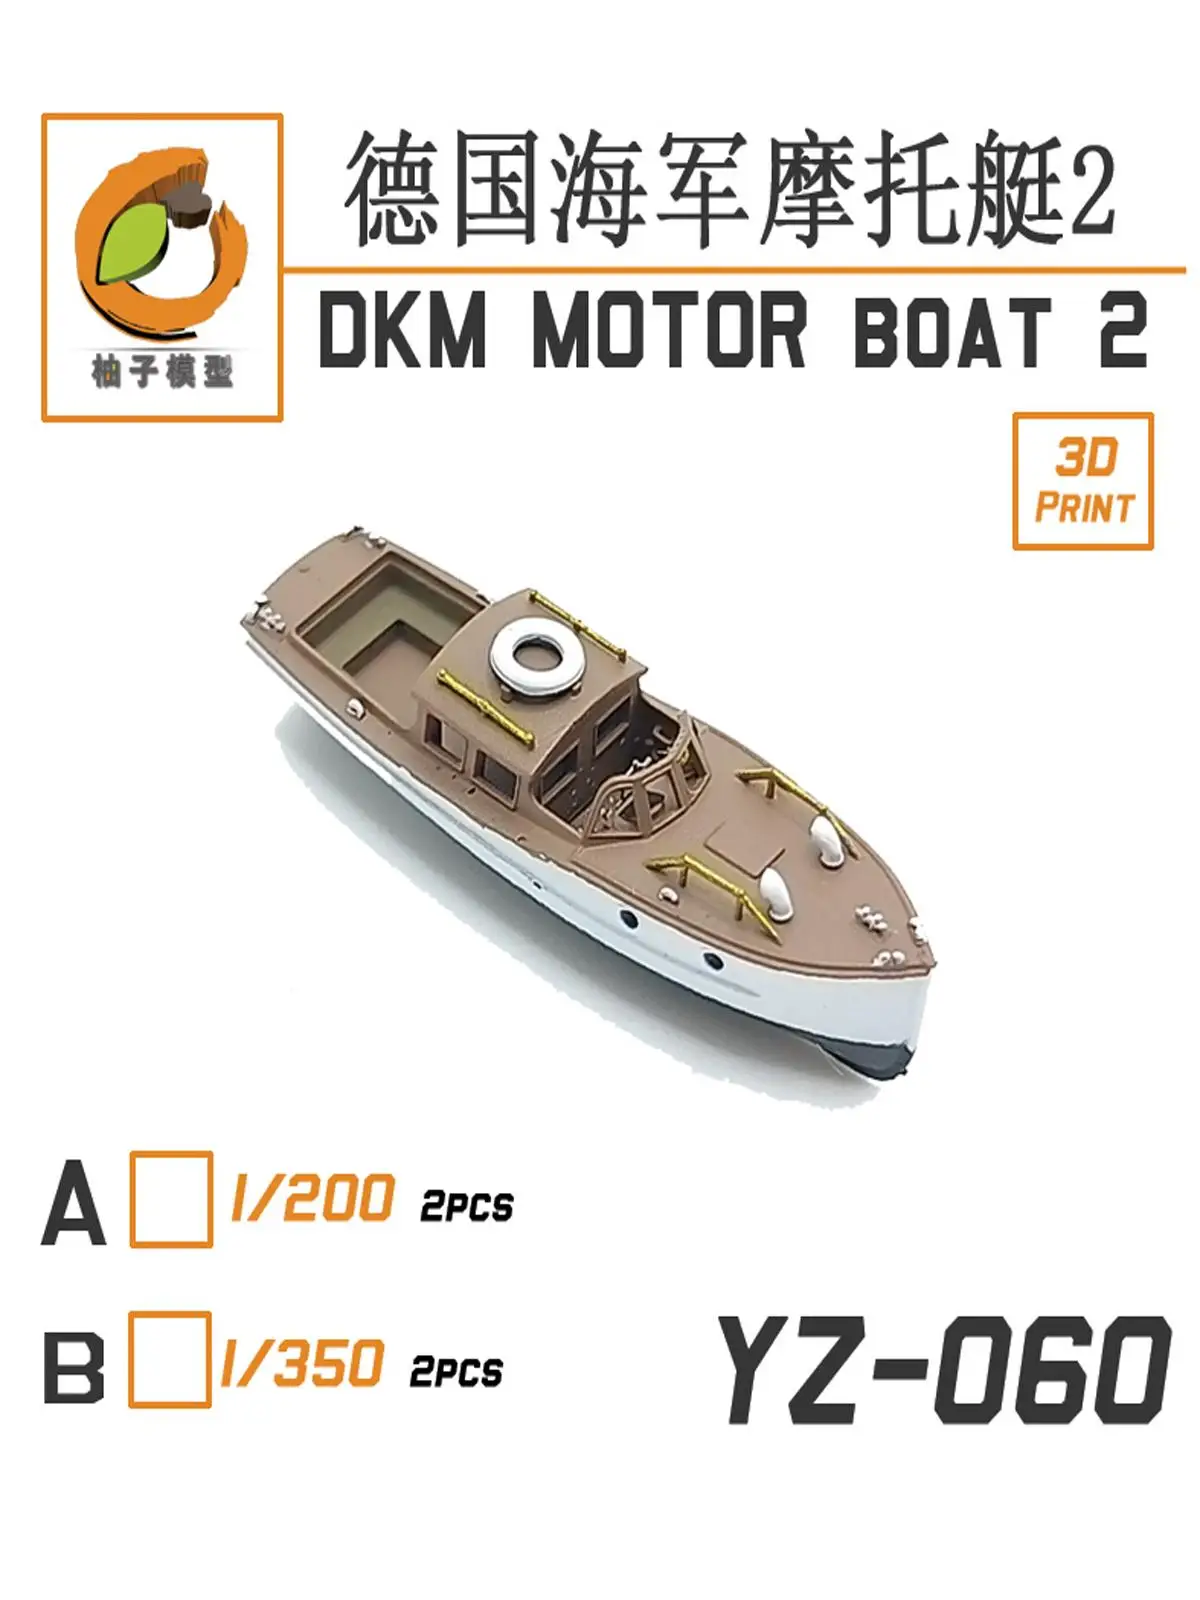 YZM Modeli YZ-060A 1/200 DKM MOTORLU TEKNE II (2 set)